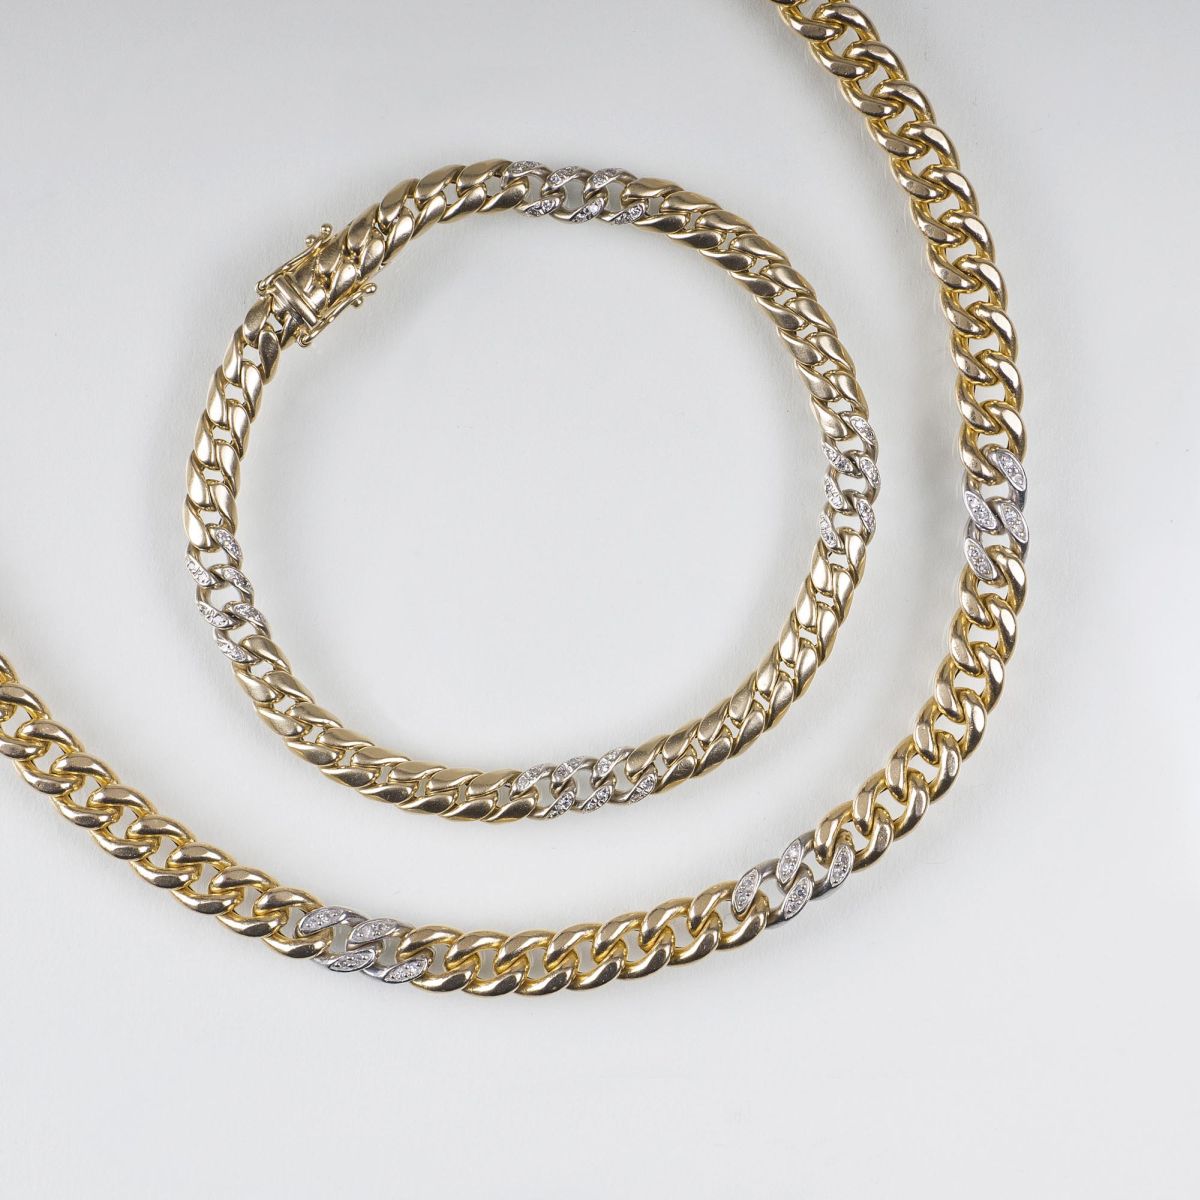 A Gold Necklace with Bracelet